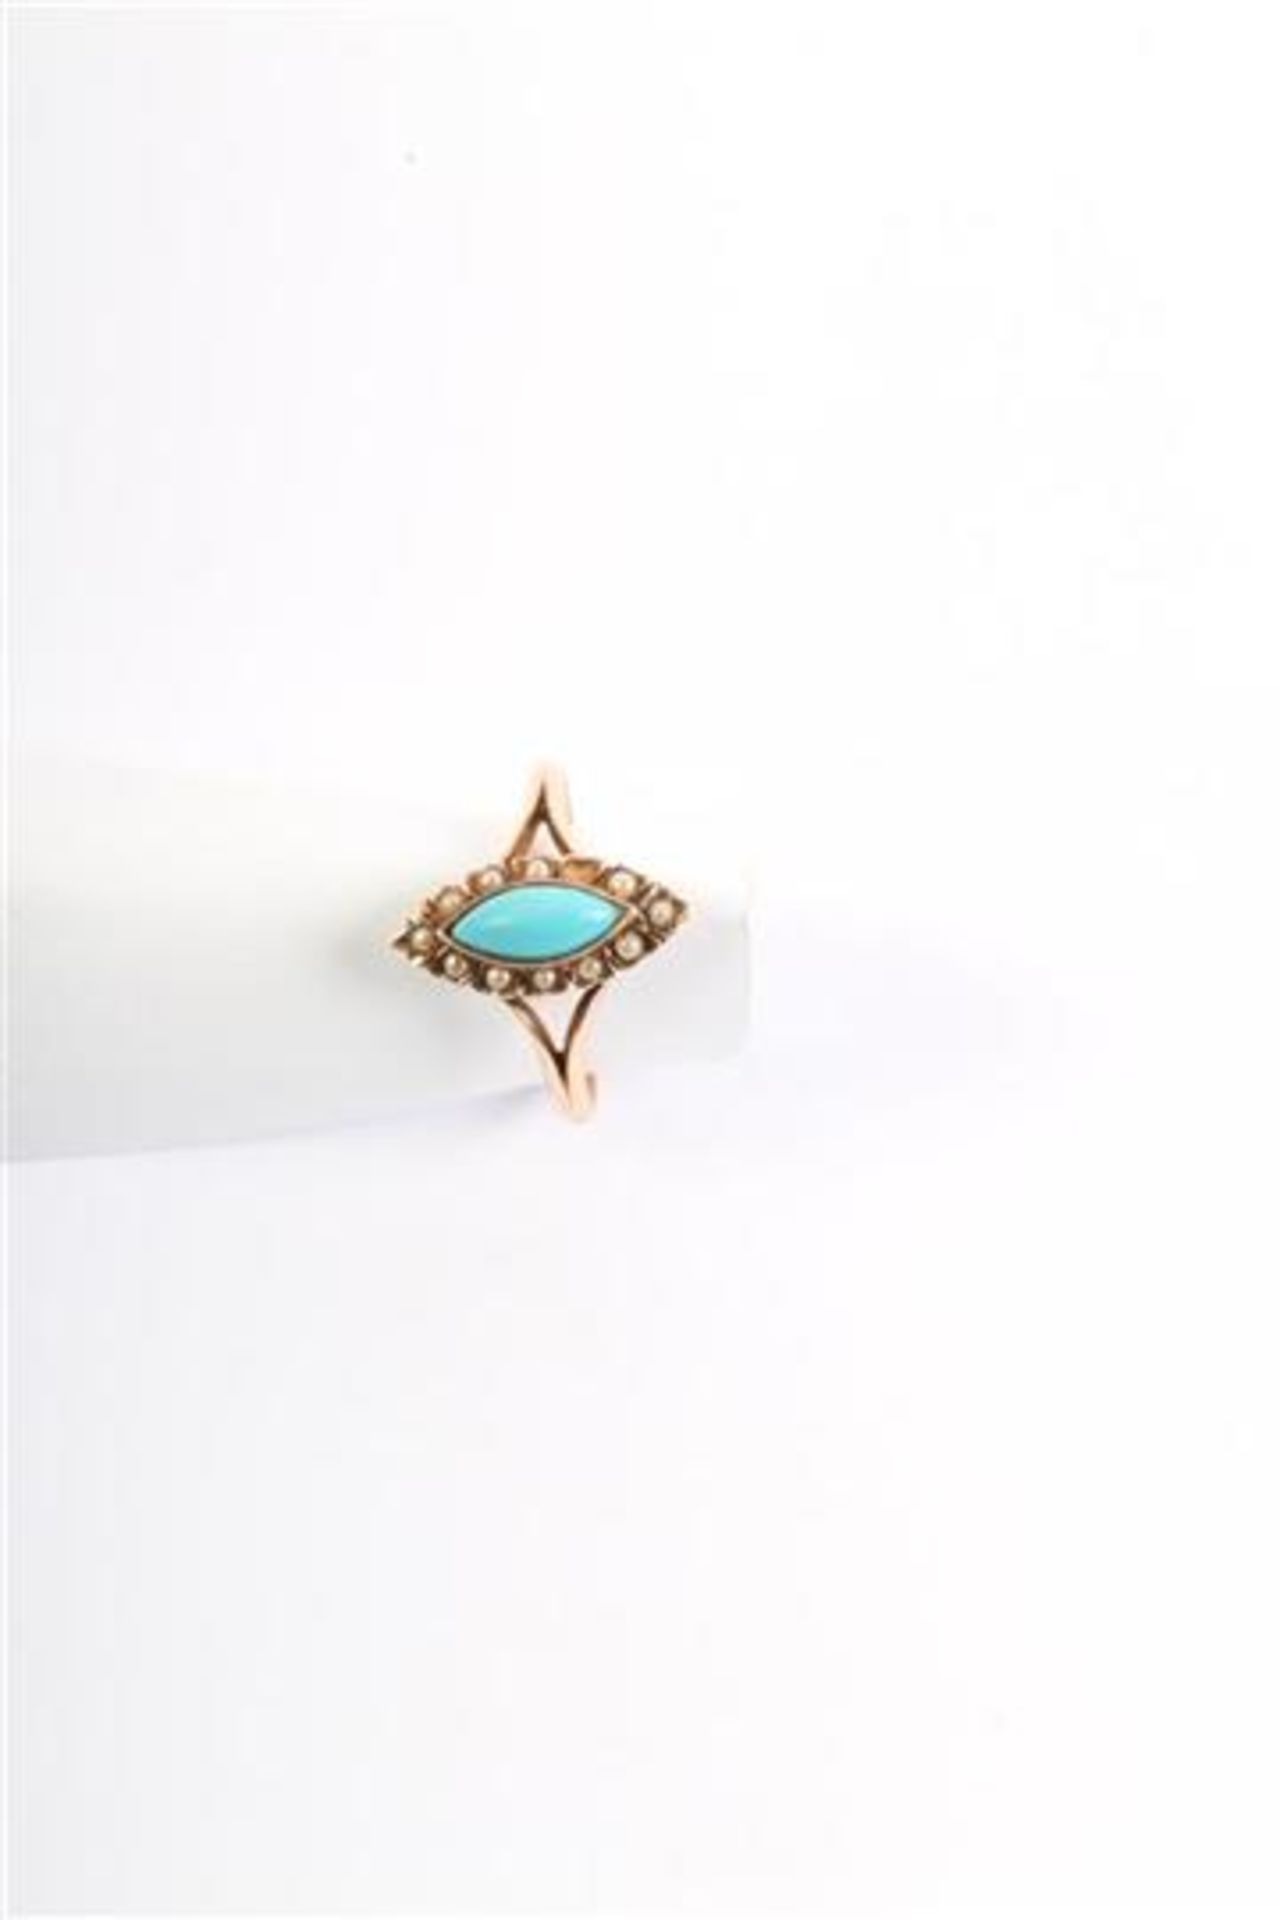 Gouden ring met turquoise en zaadparels, 1 manco, Hollands gekeurd. Gewicht: 1.7 g. Ringmaat: 16.5. - Bild 2 aus 2